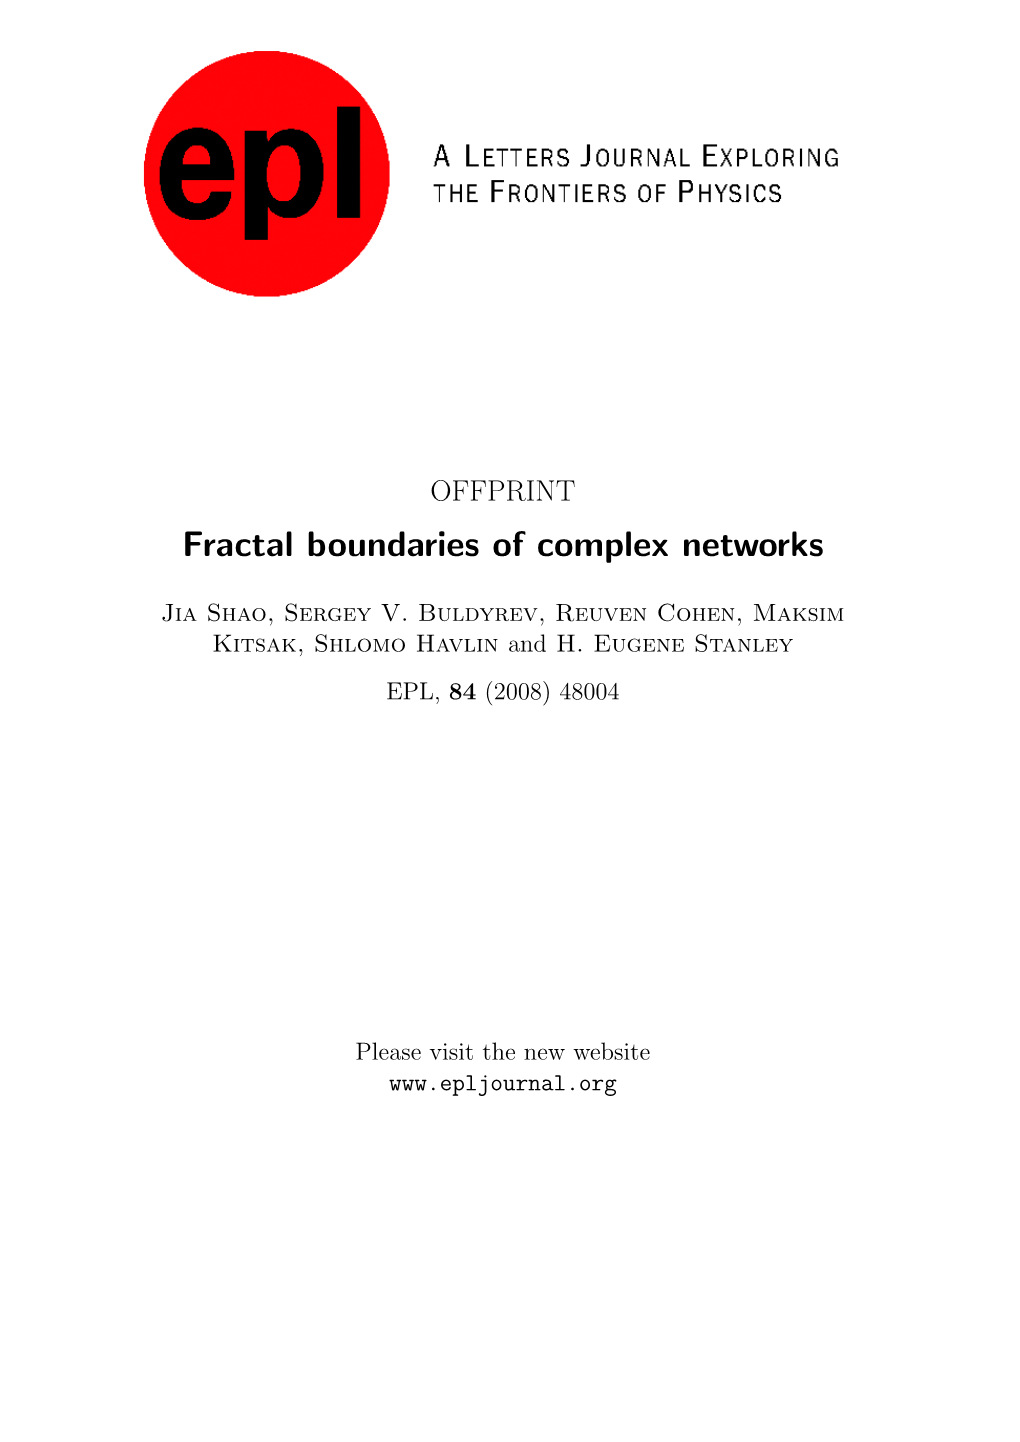 Fractal Boundaries of Complex Networks